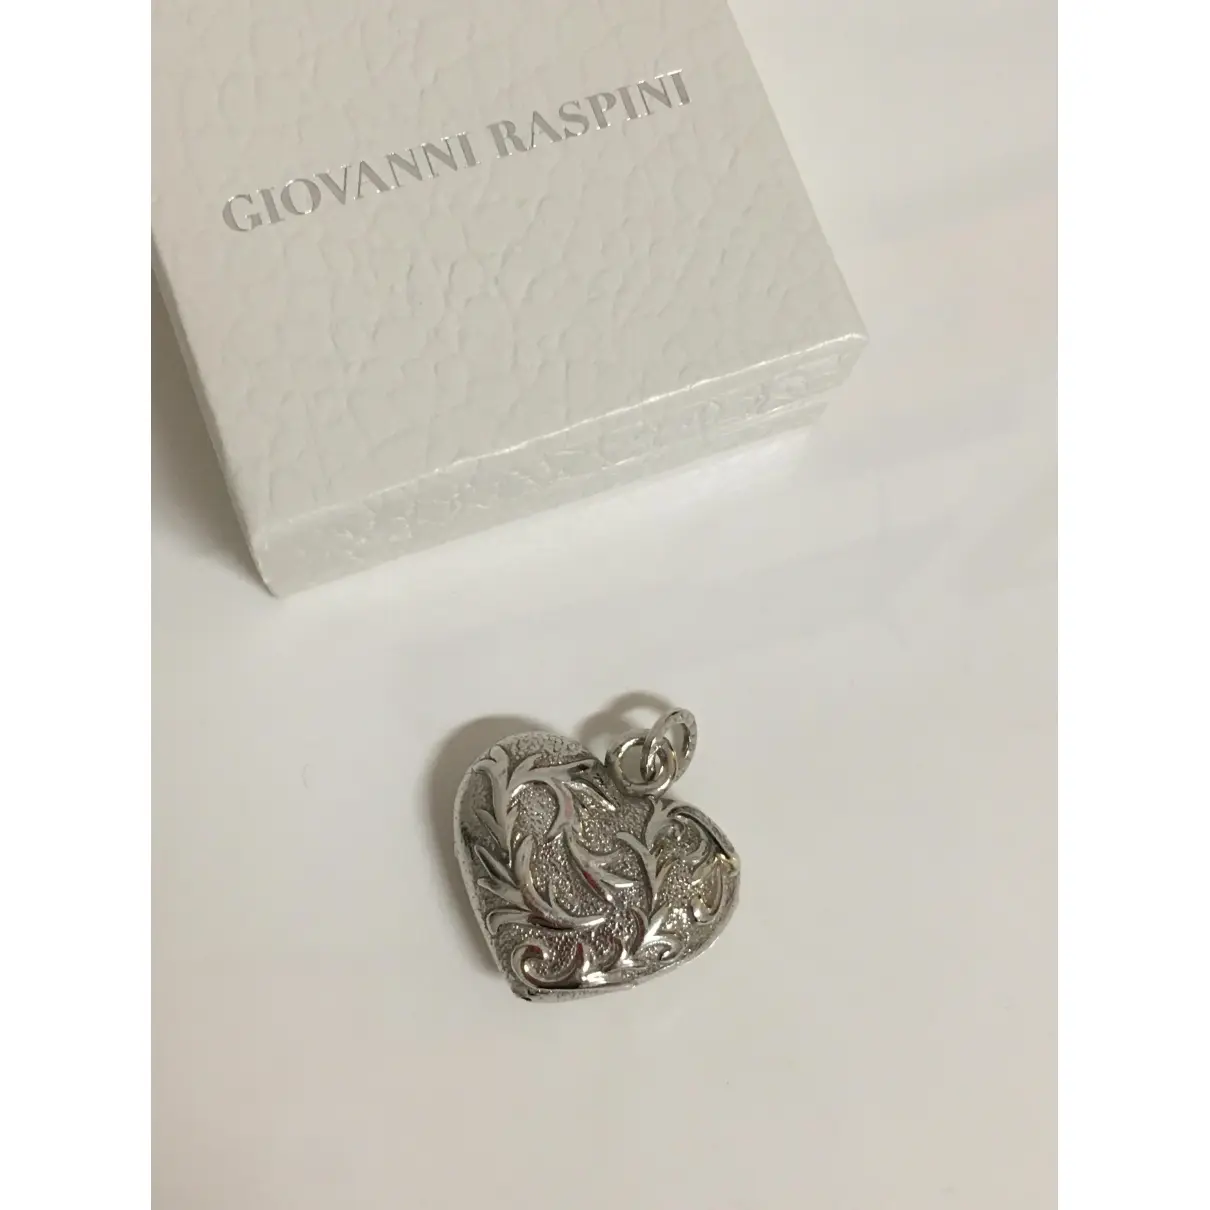 Buy Giovanni Raspini Silver pendant online